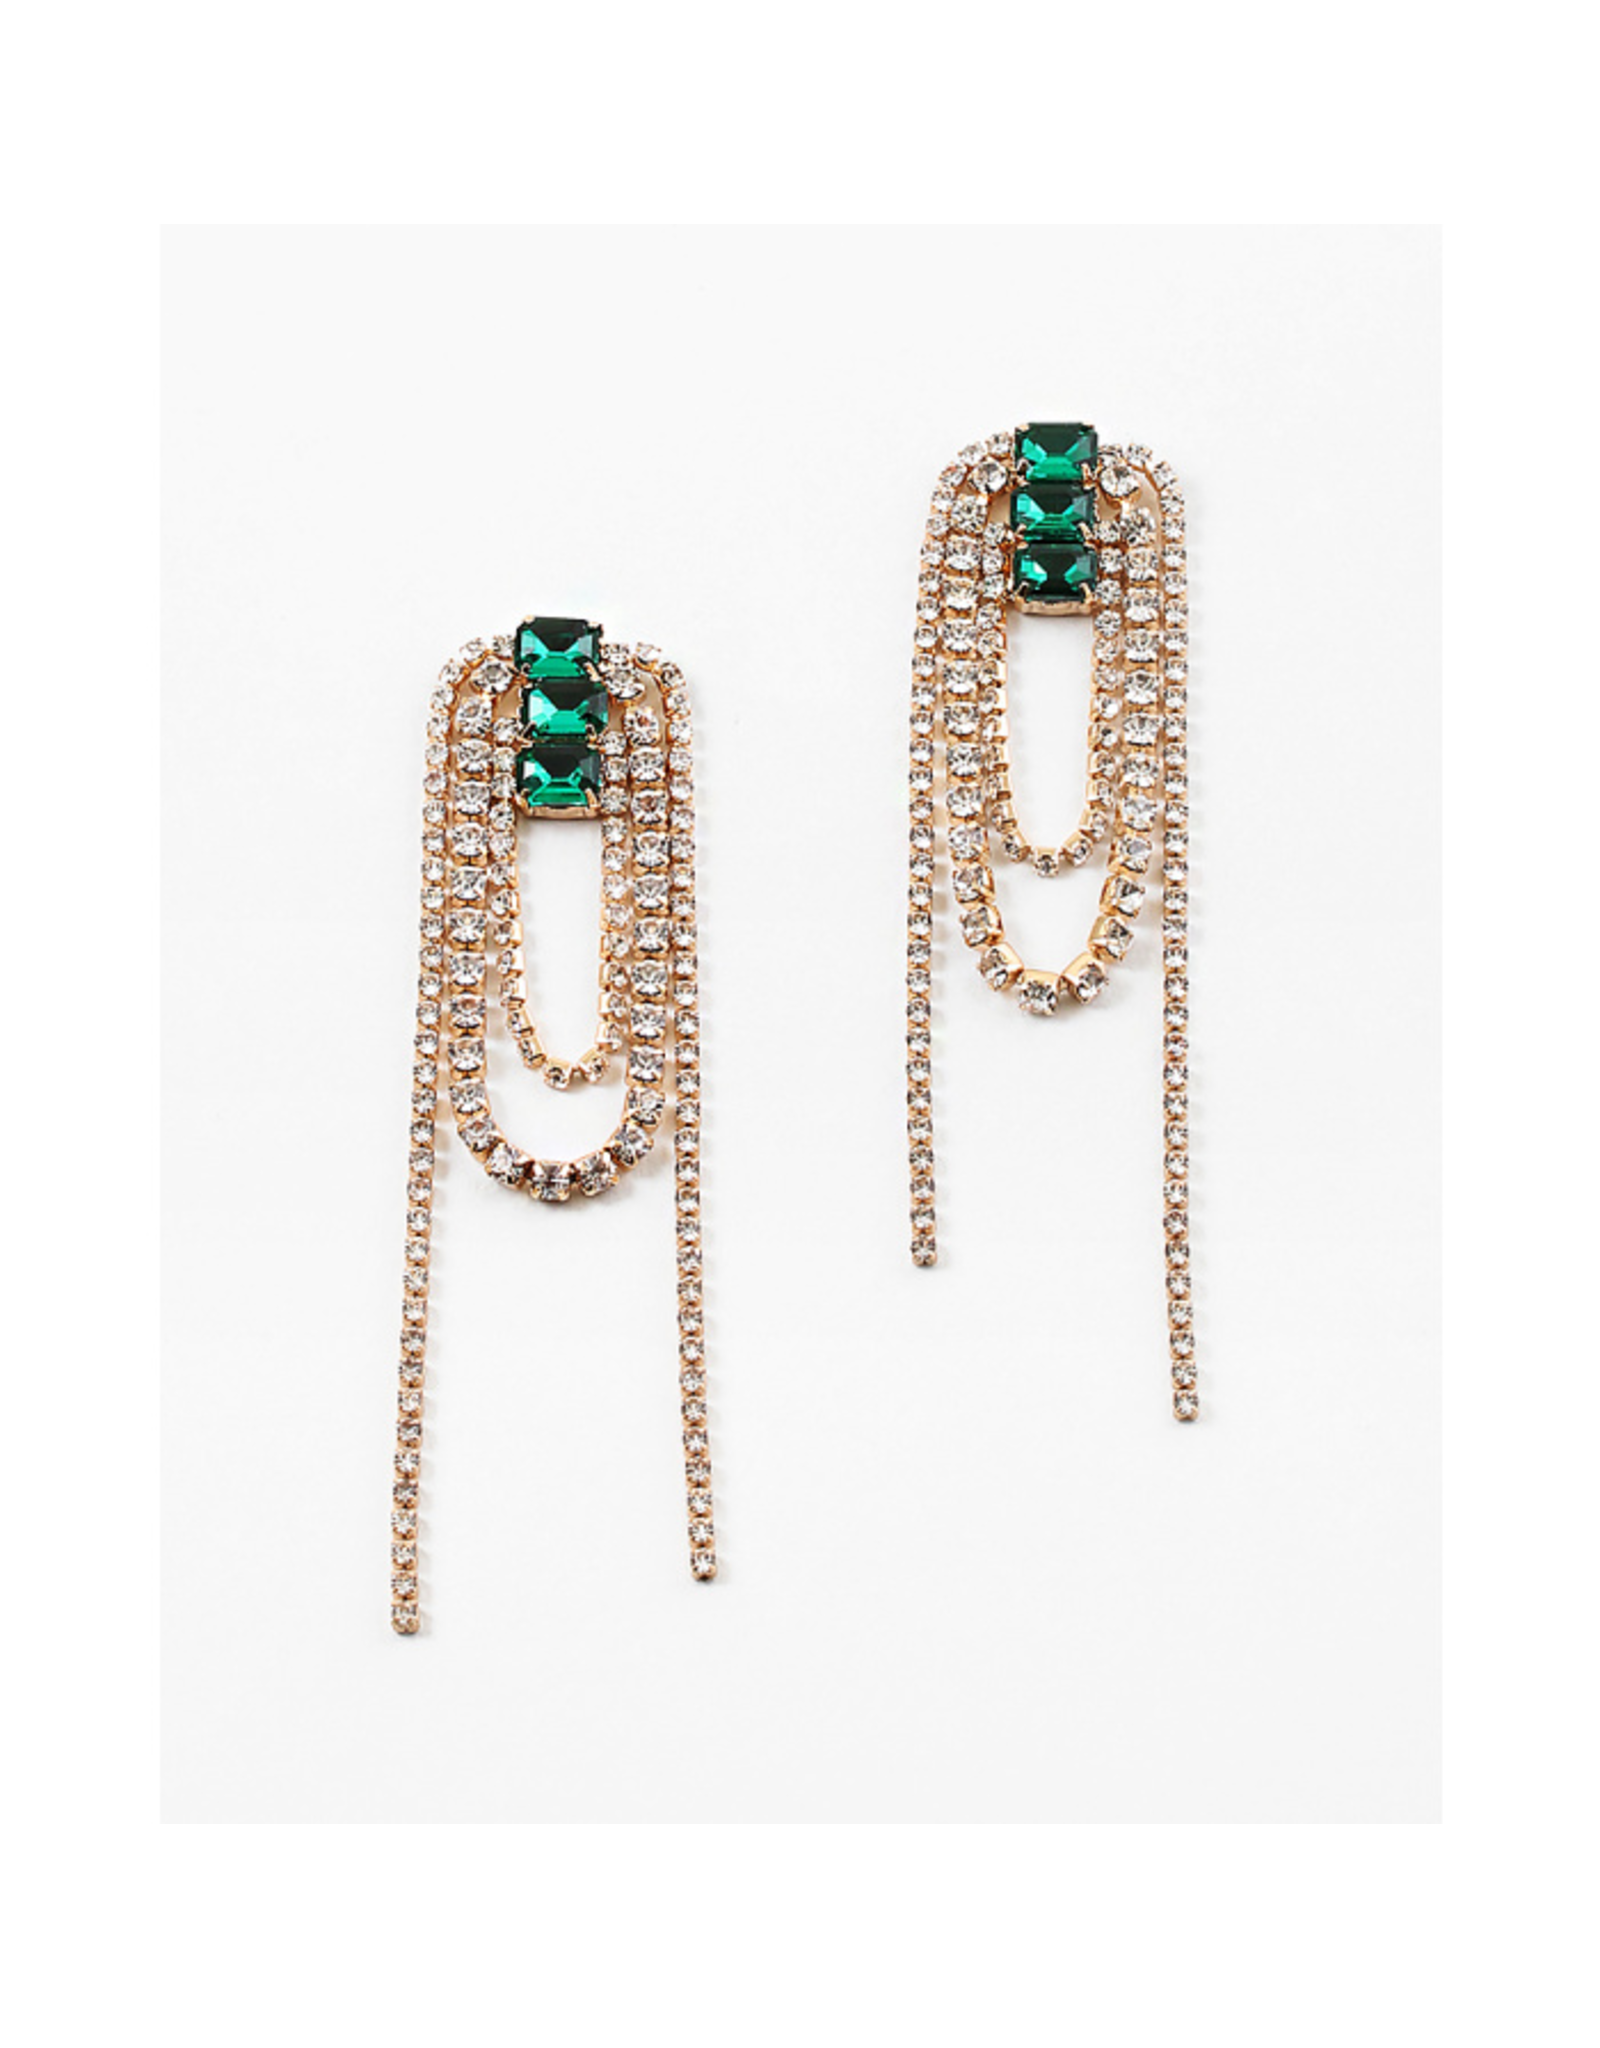 Blue Suede Jewels Emerald amd Crystal Rhinestone Earrings